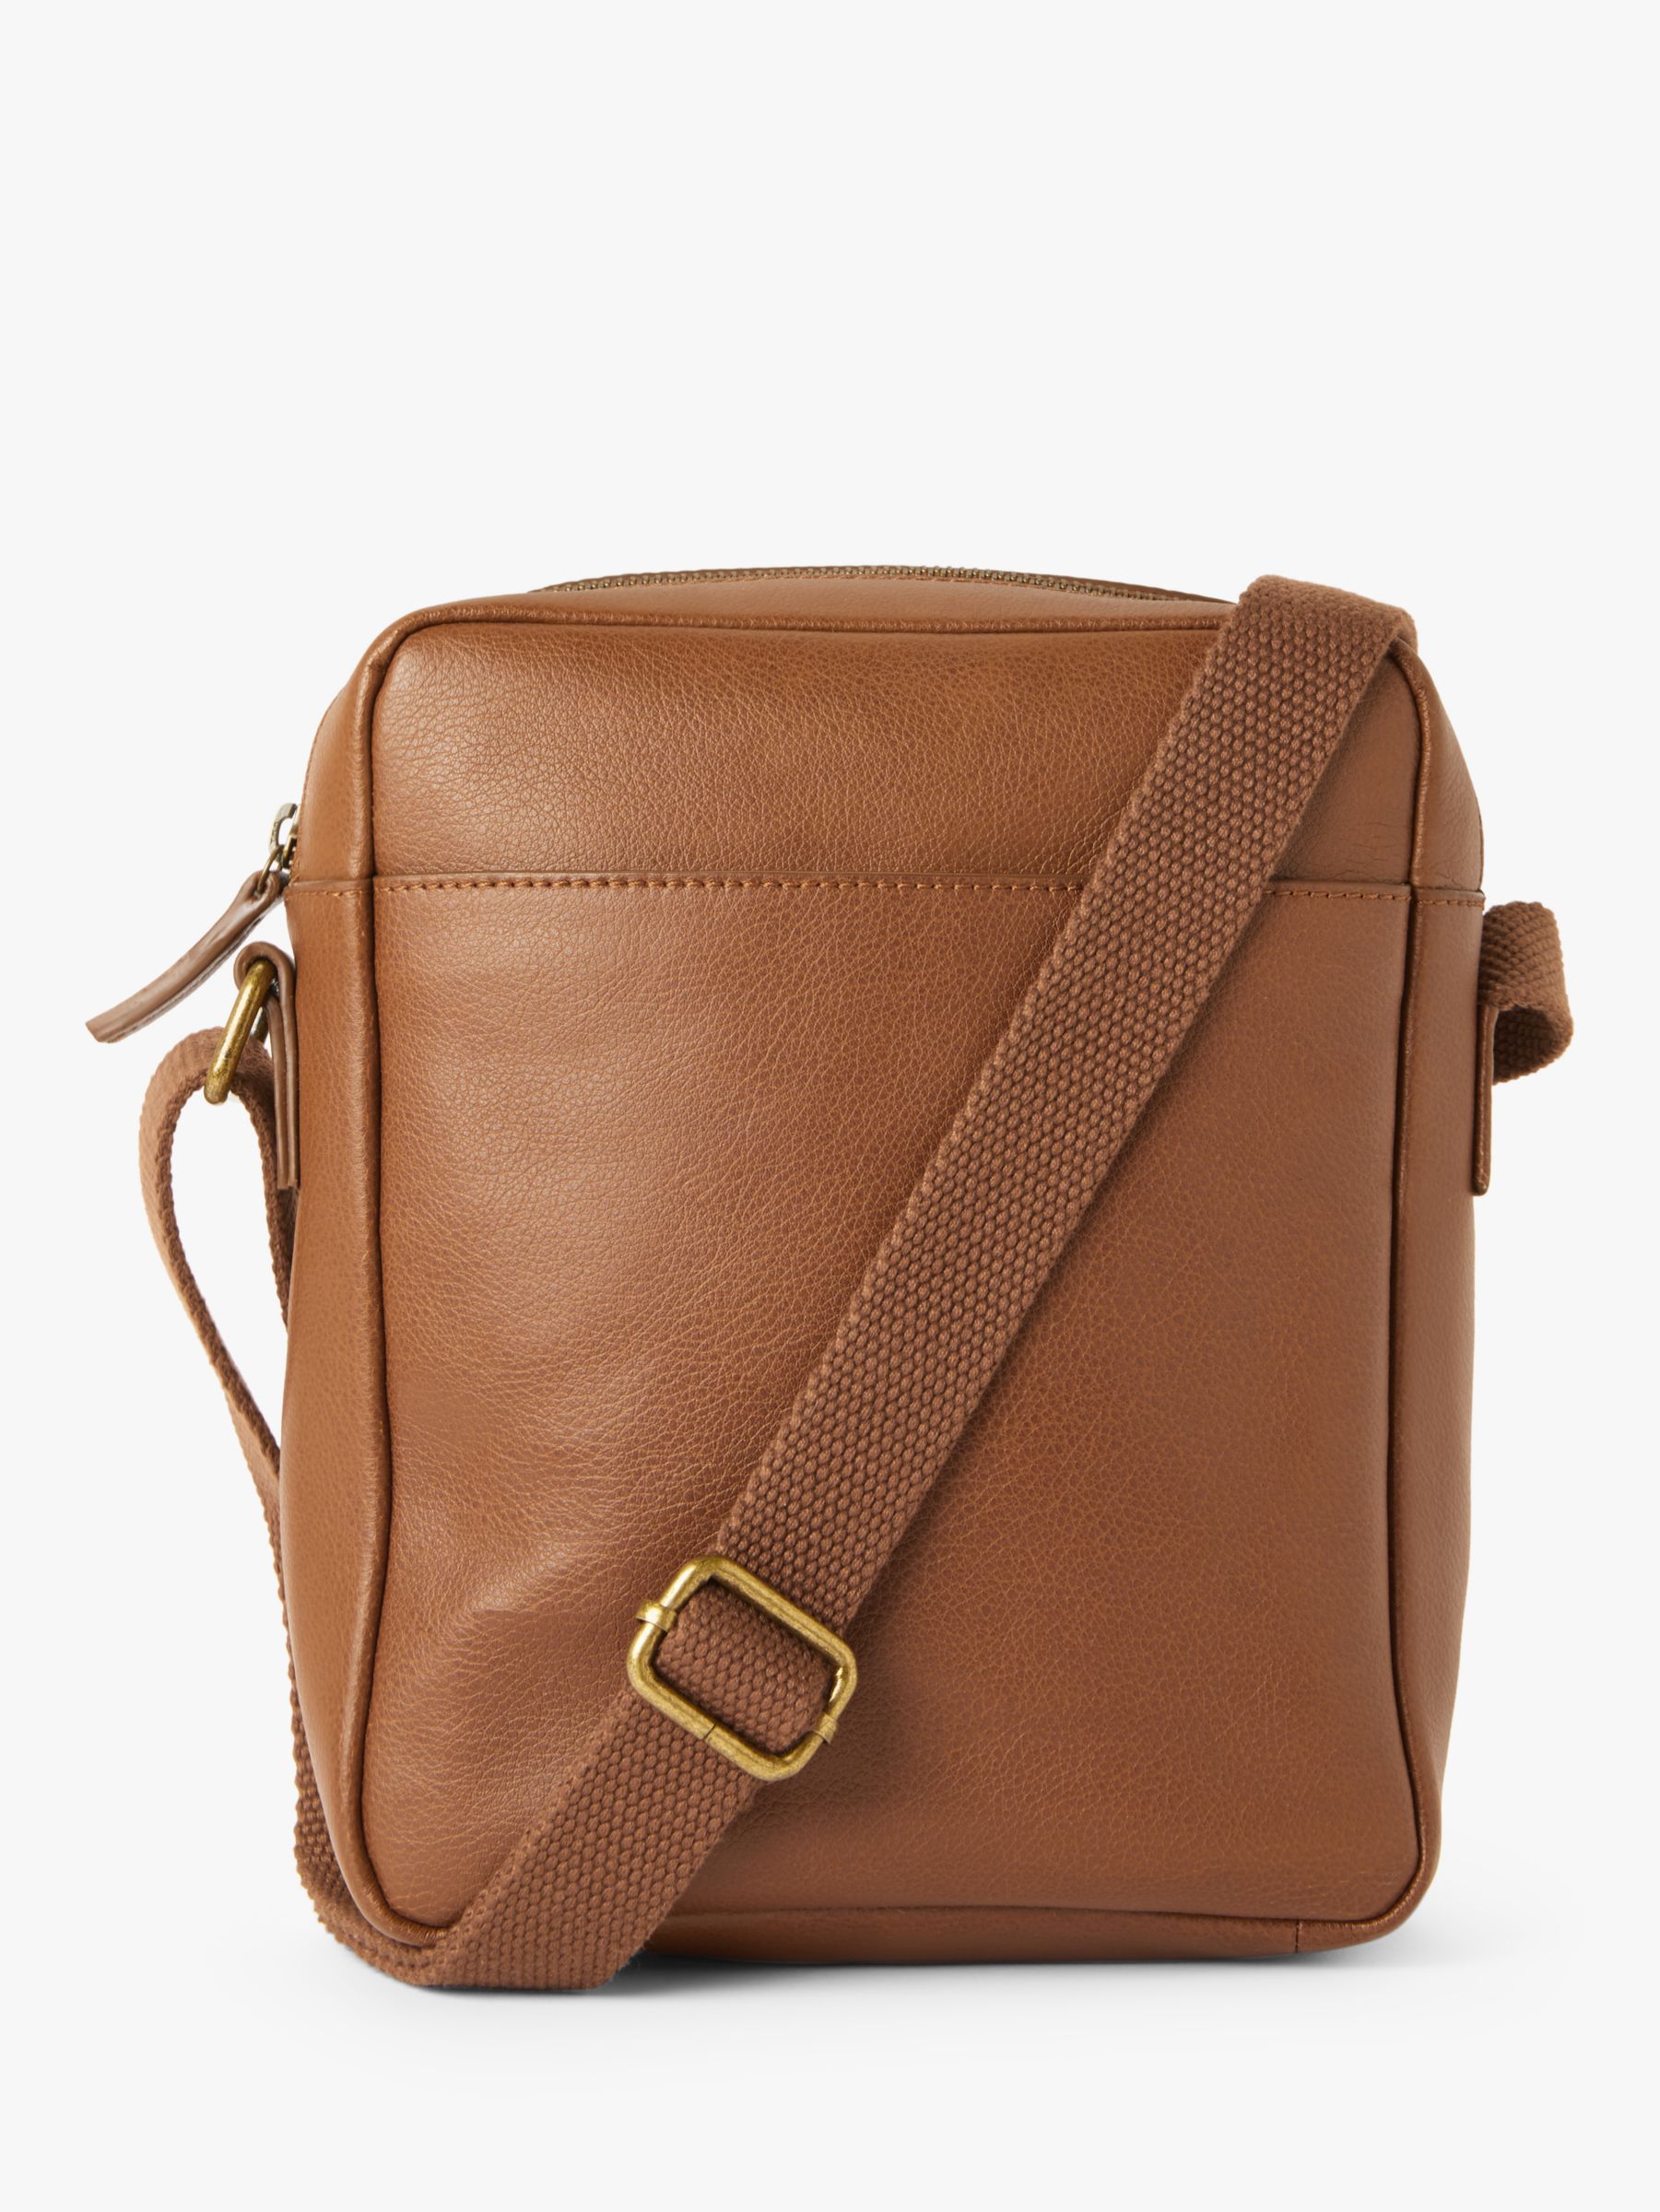 Men's Bags | Briefcase, Messenger, Shoulder, Holdall, Leather Bags ...